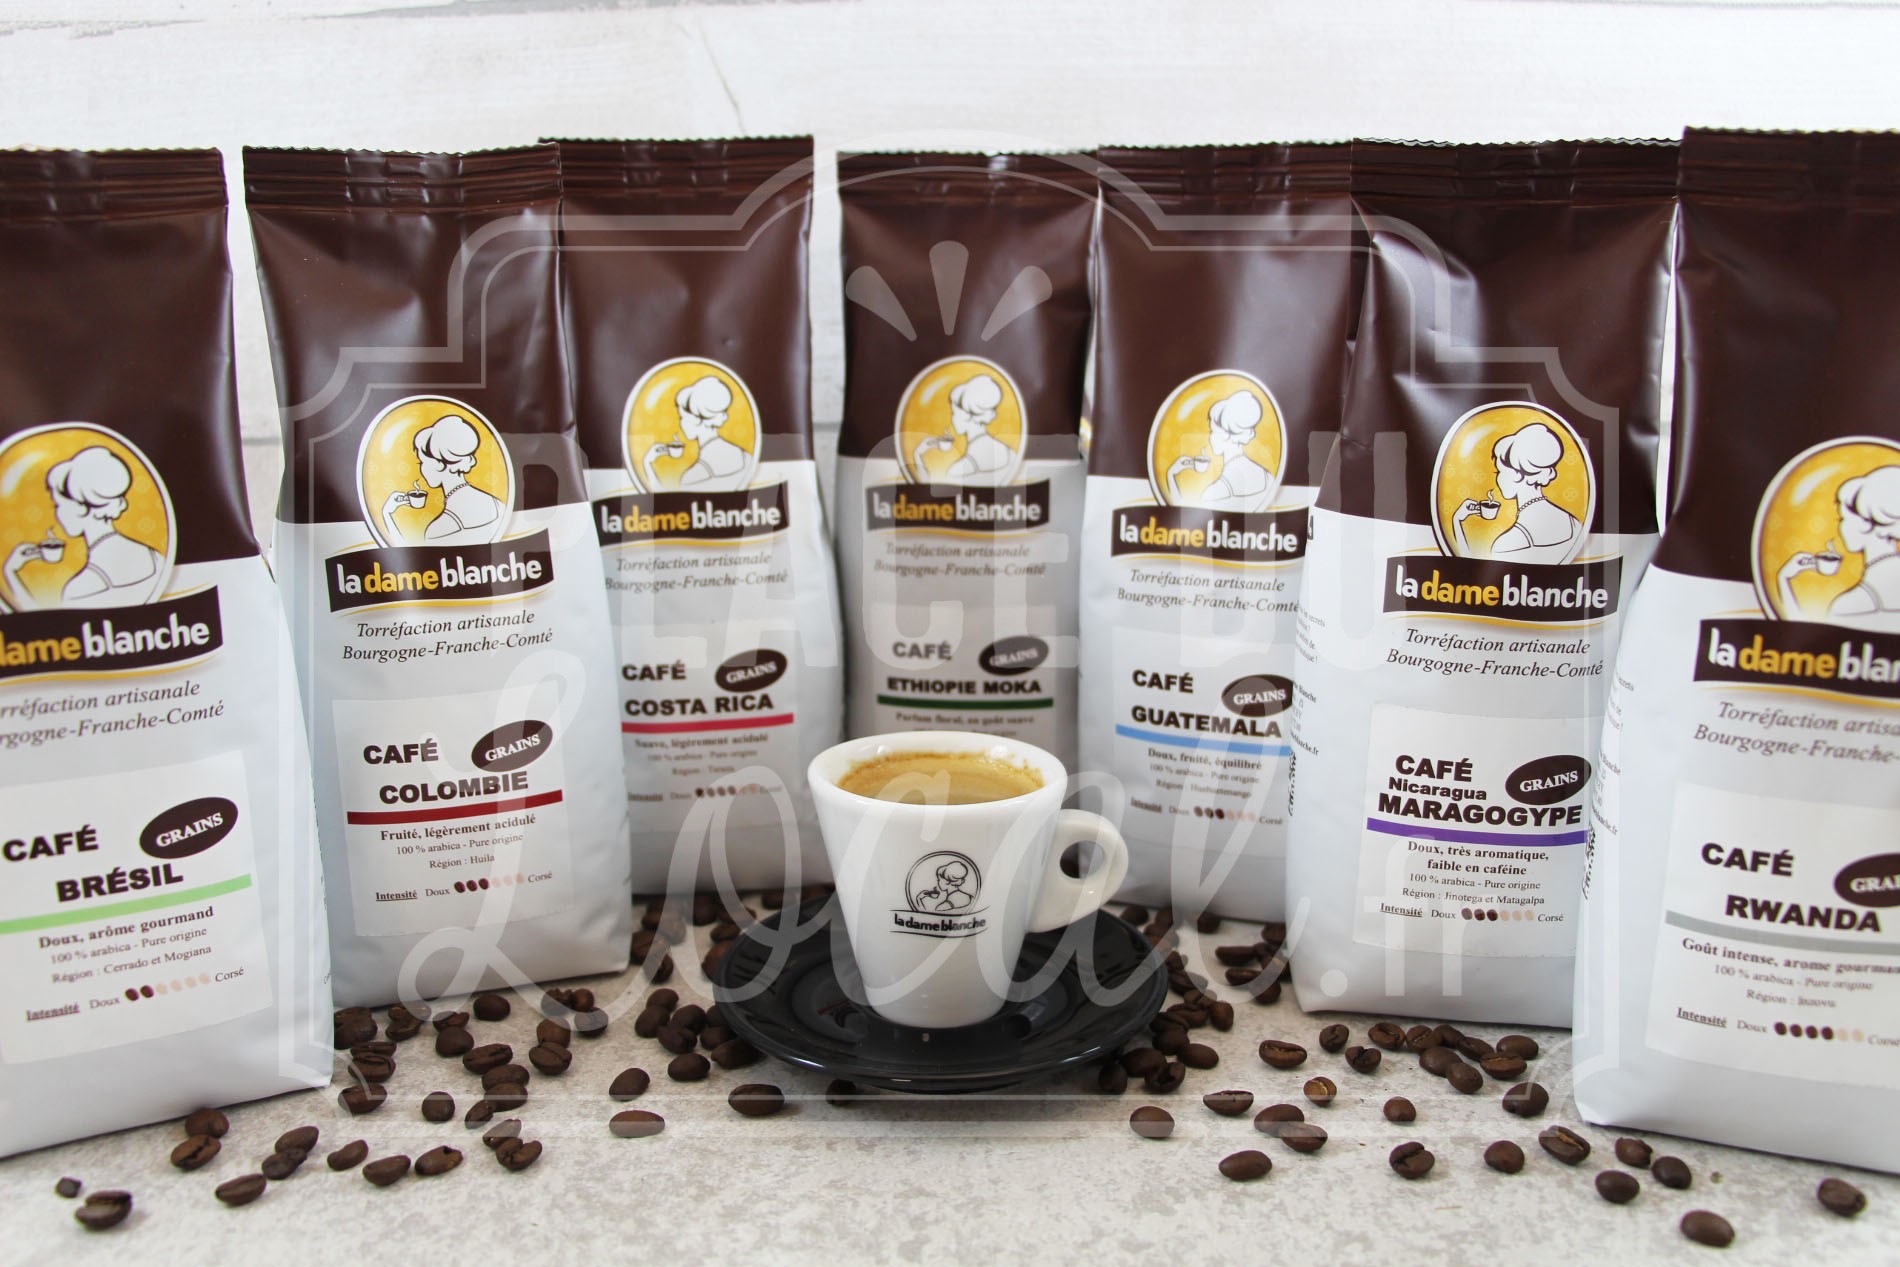 Café grain bio 100% arabica – Origine Brésil